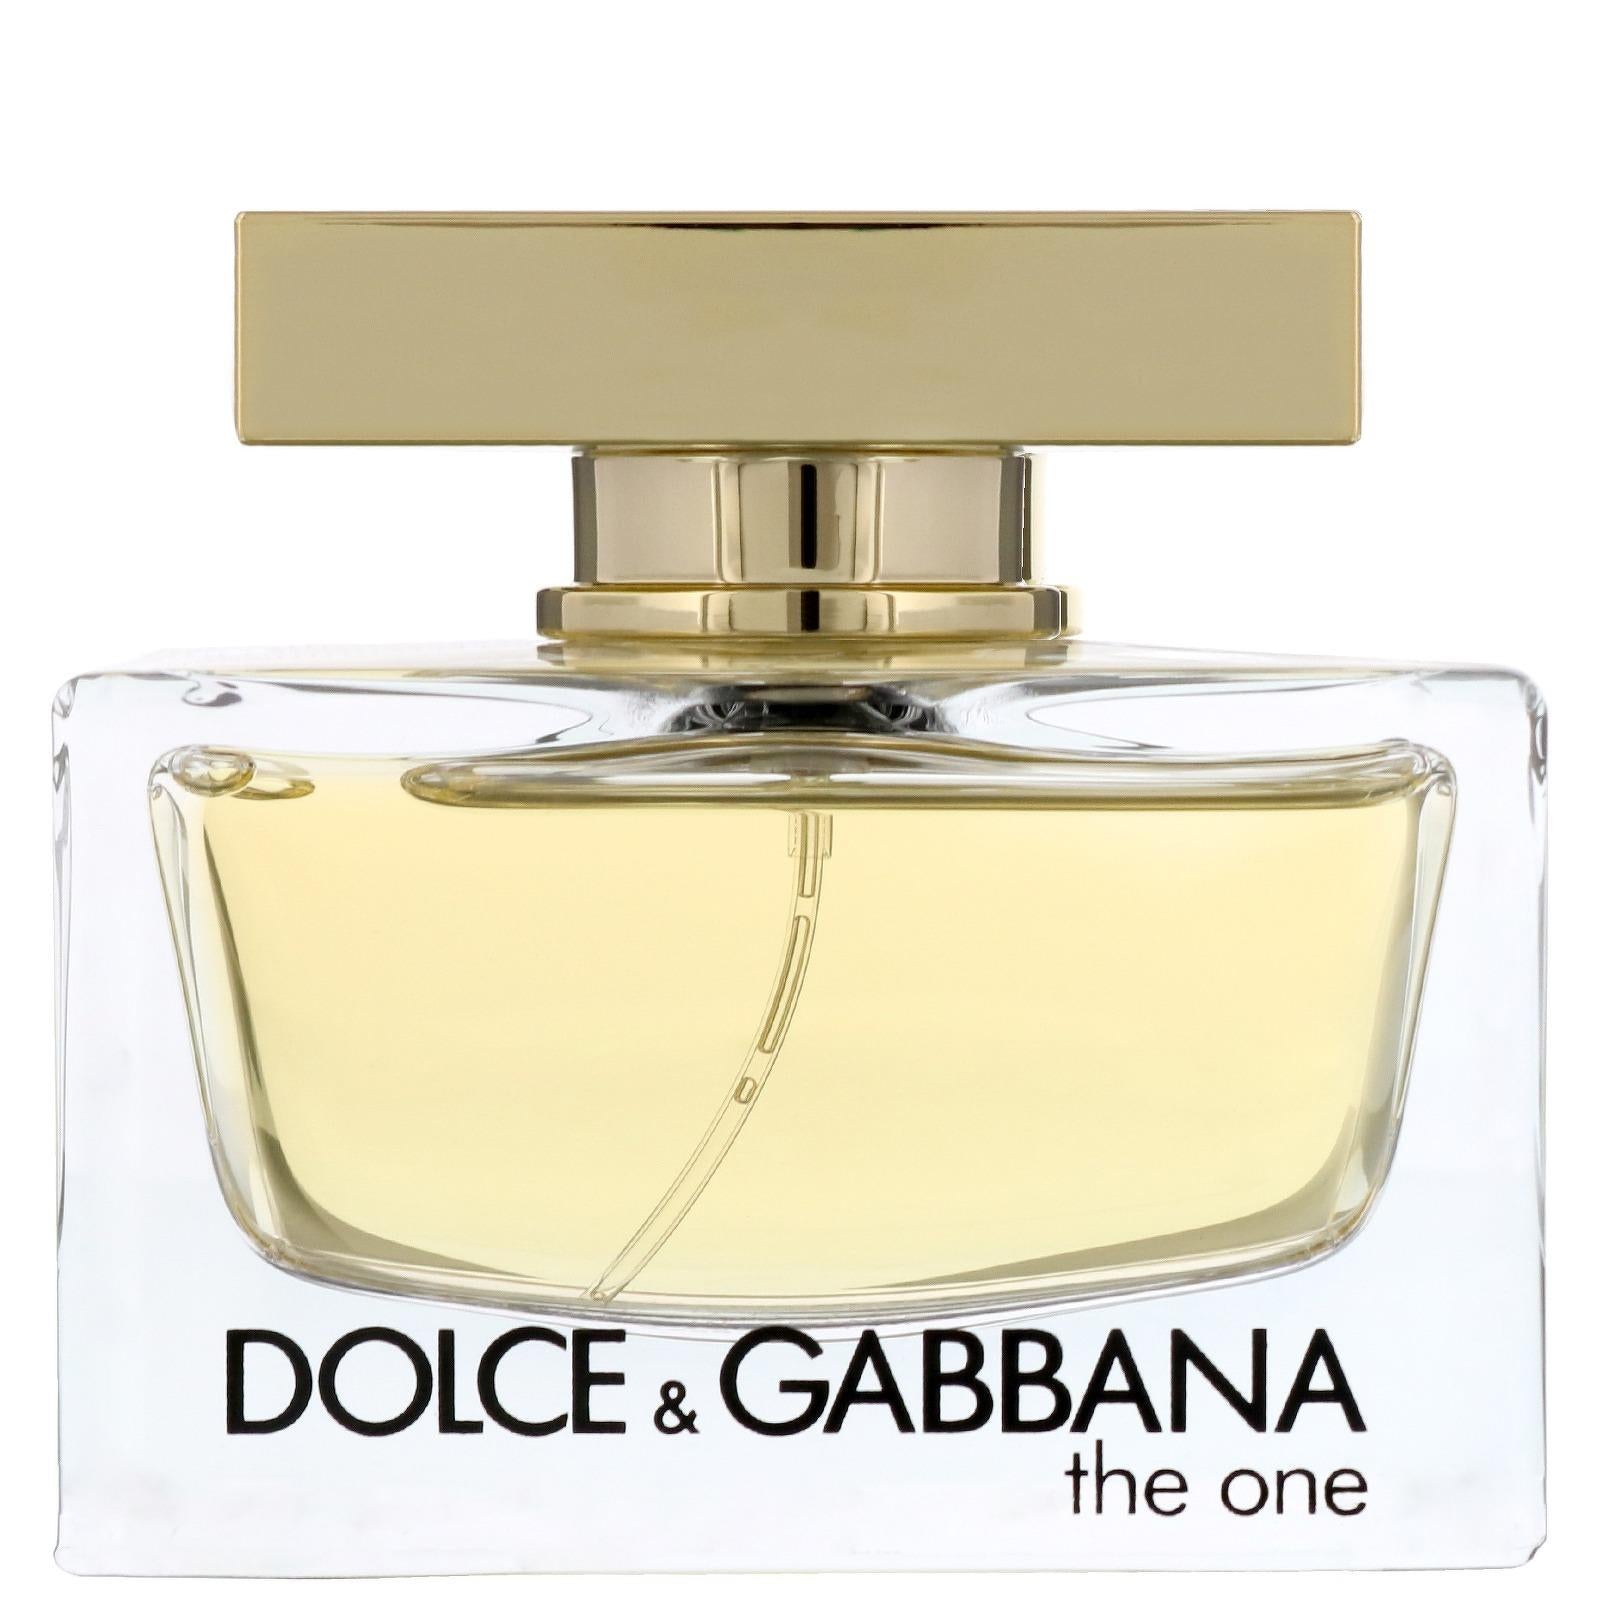 Dolce & Gabbana The One Eau De Parfum Spray 75ml